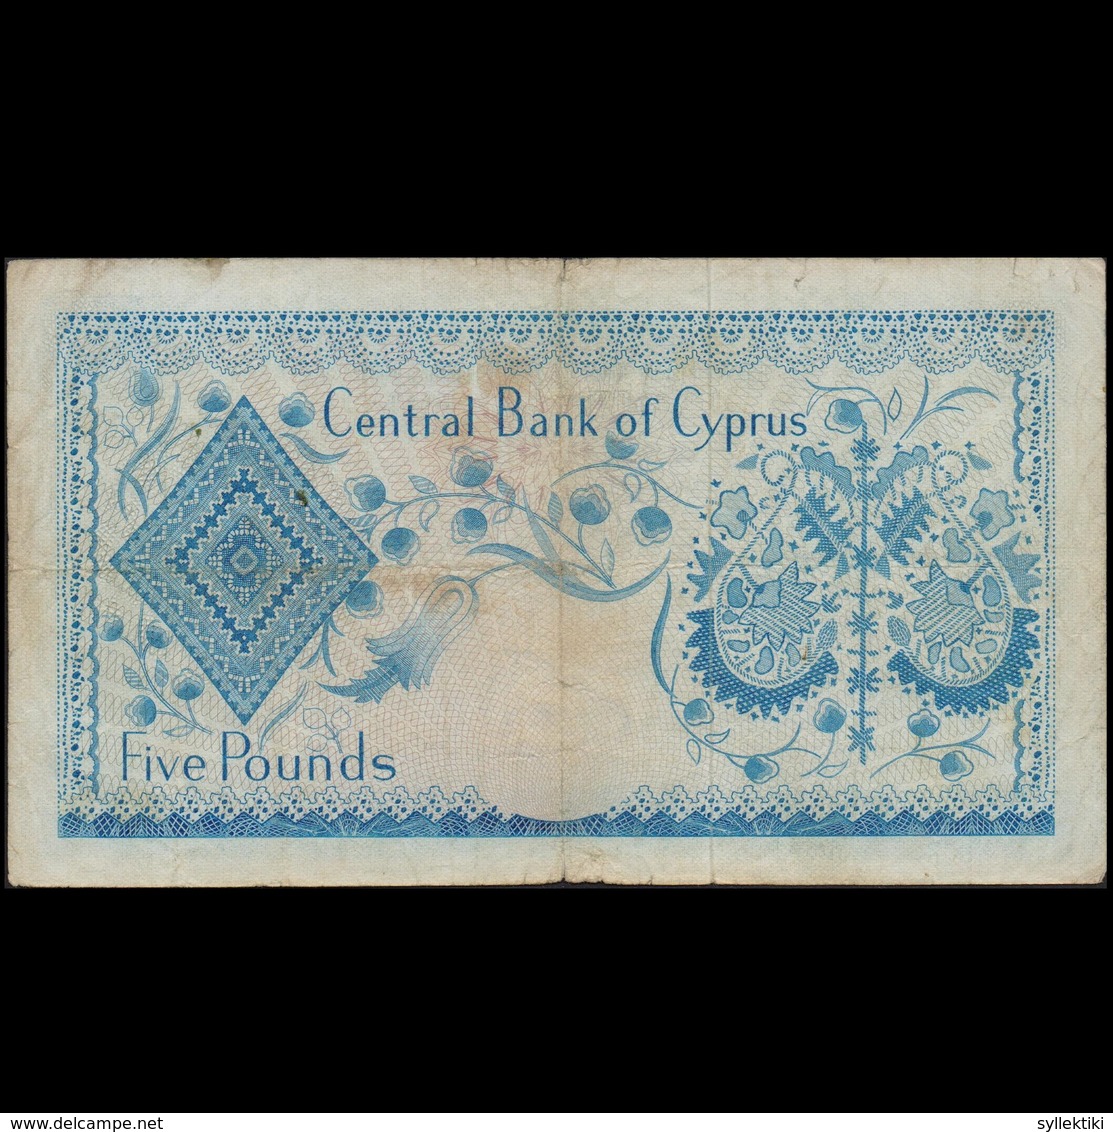 CYPRUS 1969 FIVE POUNDS BANKNOTE F+ - Zypern